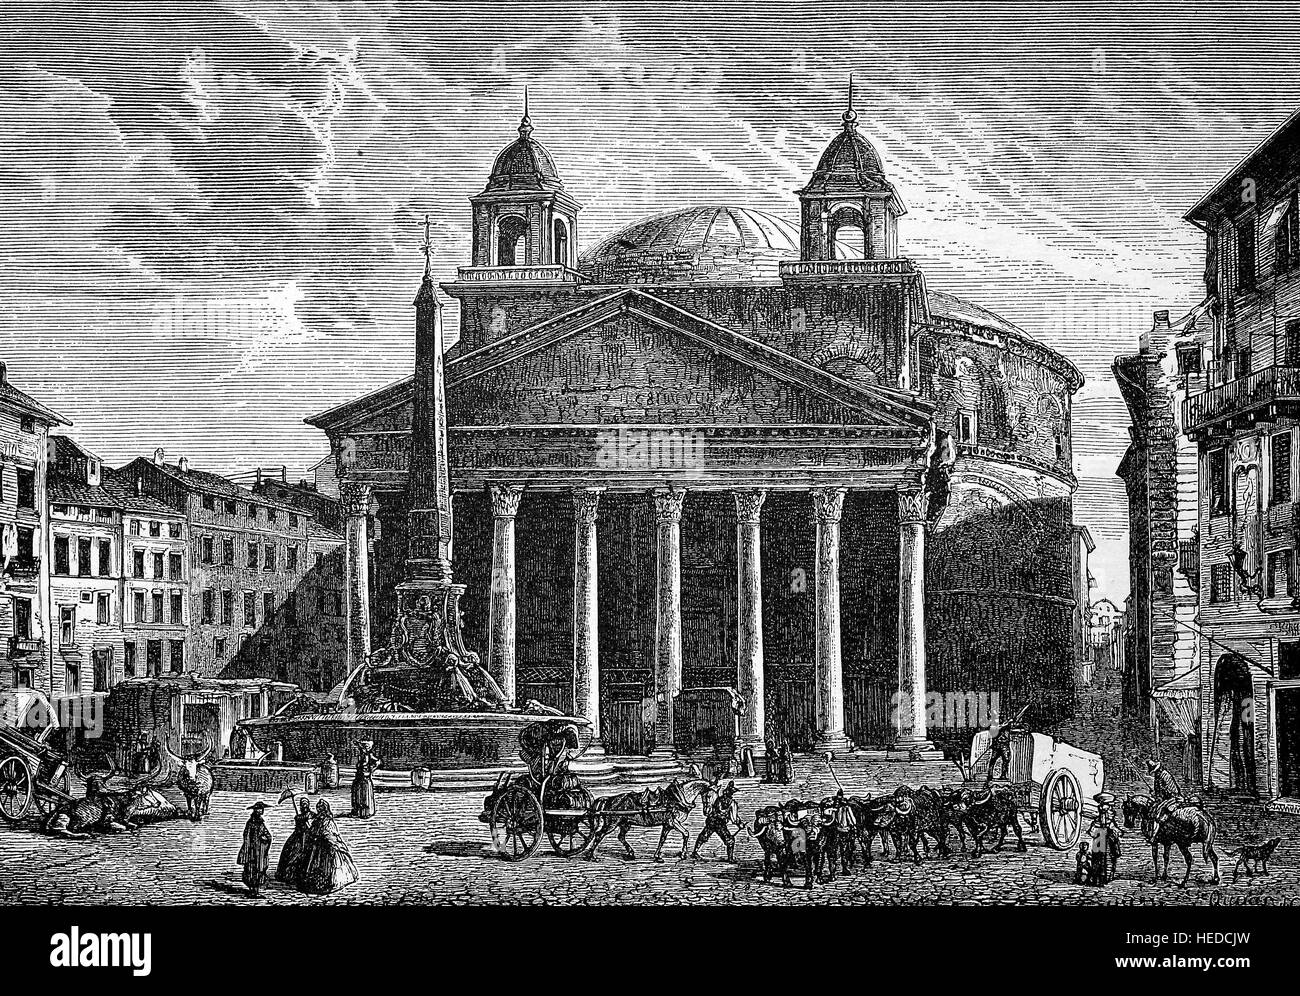 Pantheon of agrippa rome Imágenes de stock en blanco y negro - Alamy